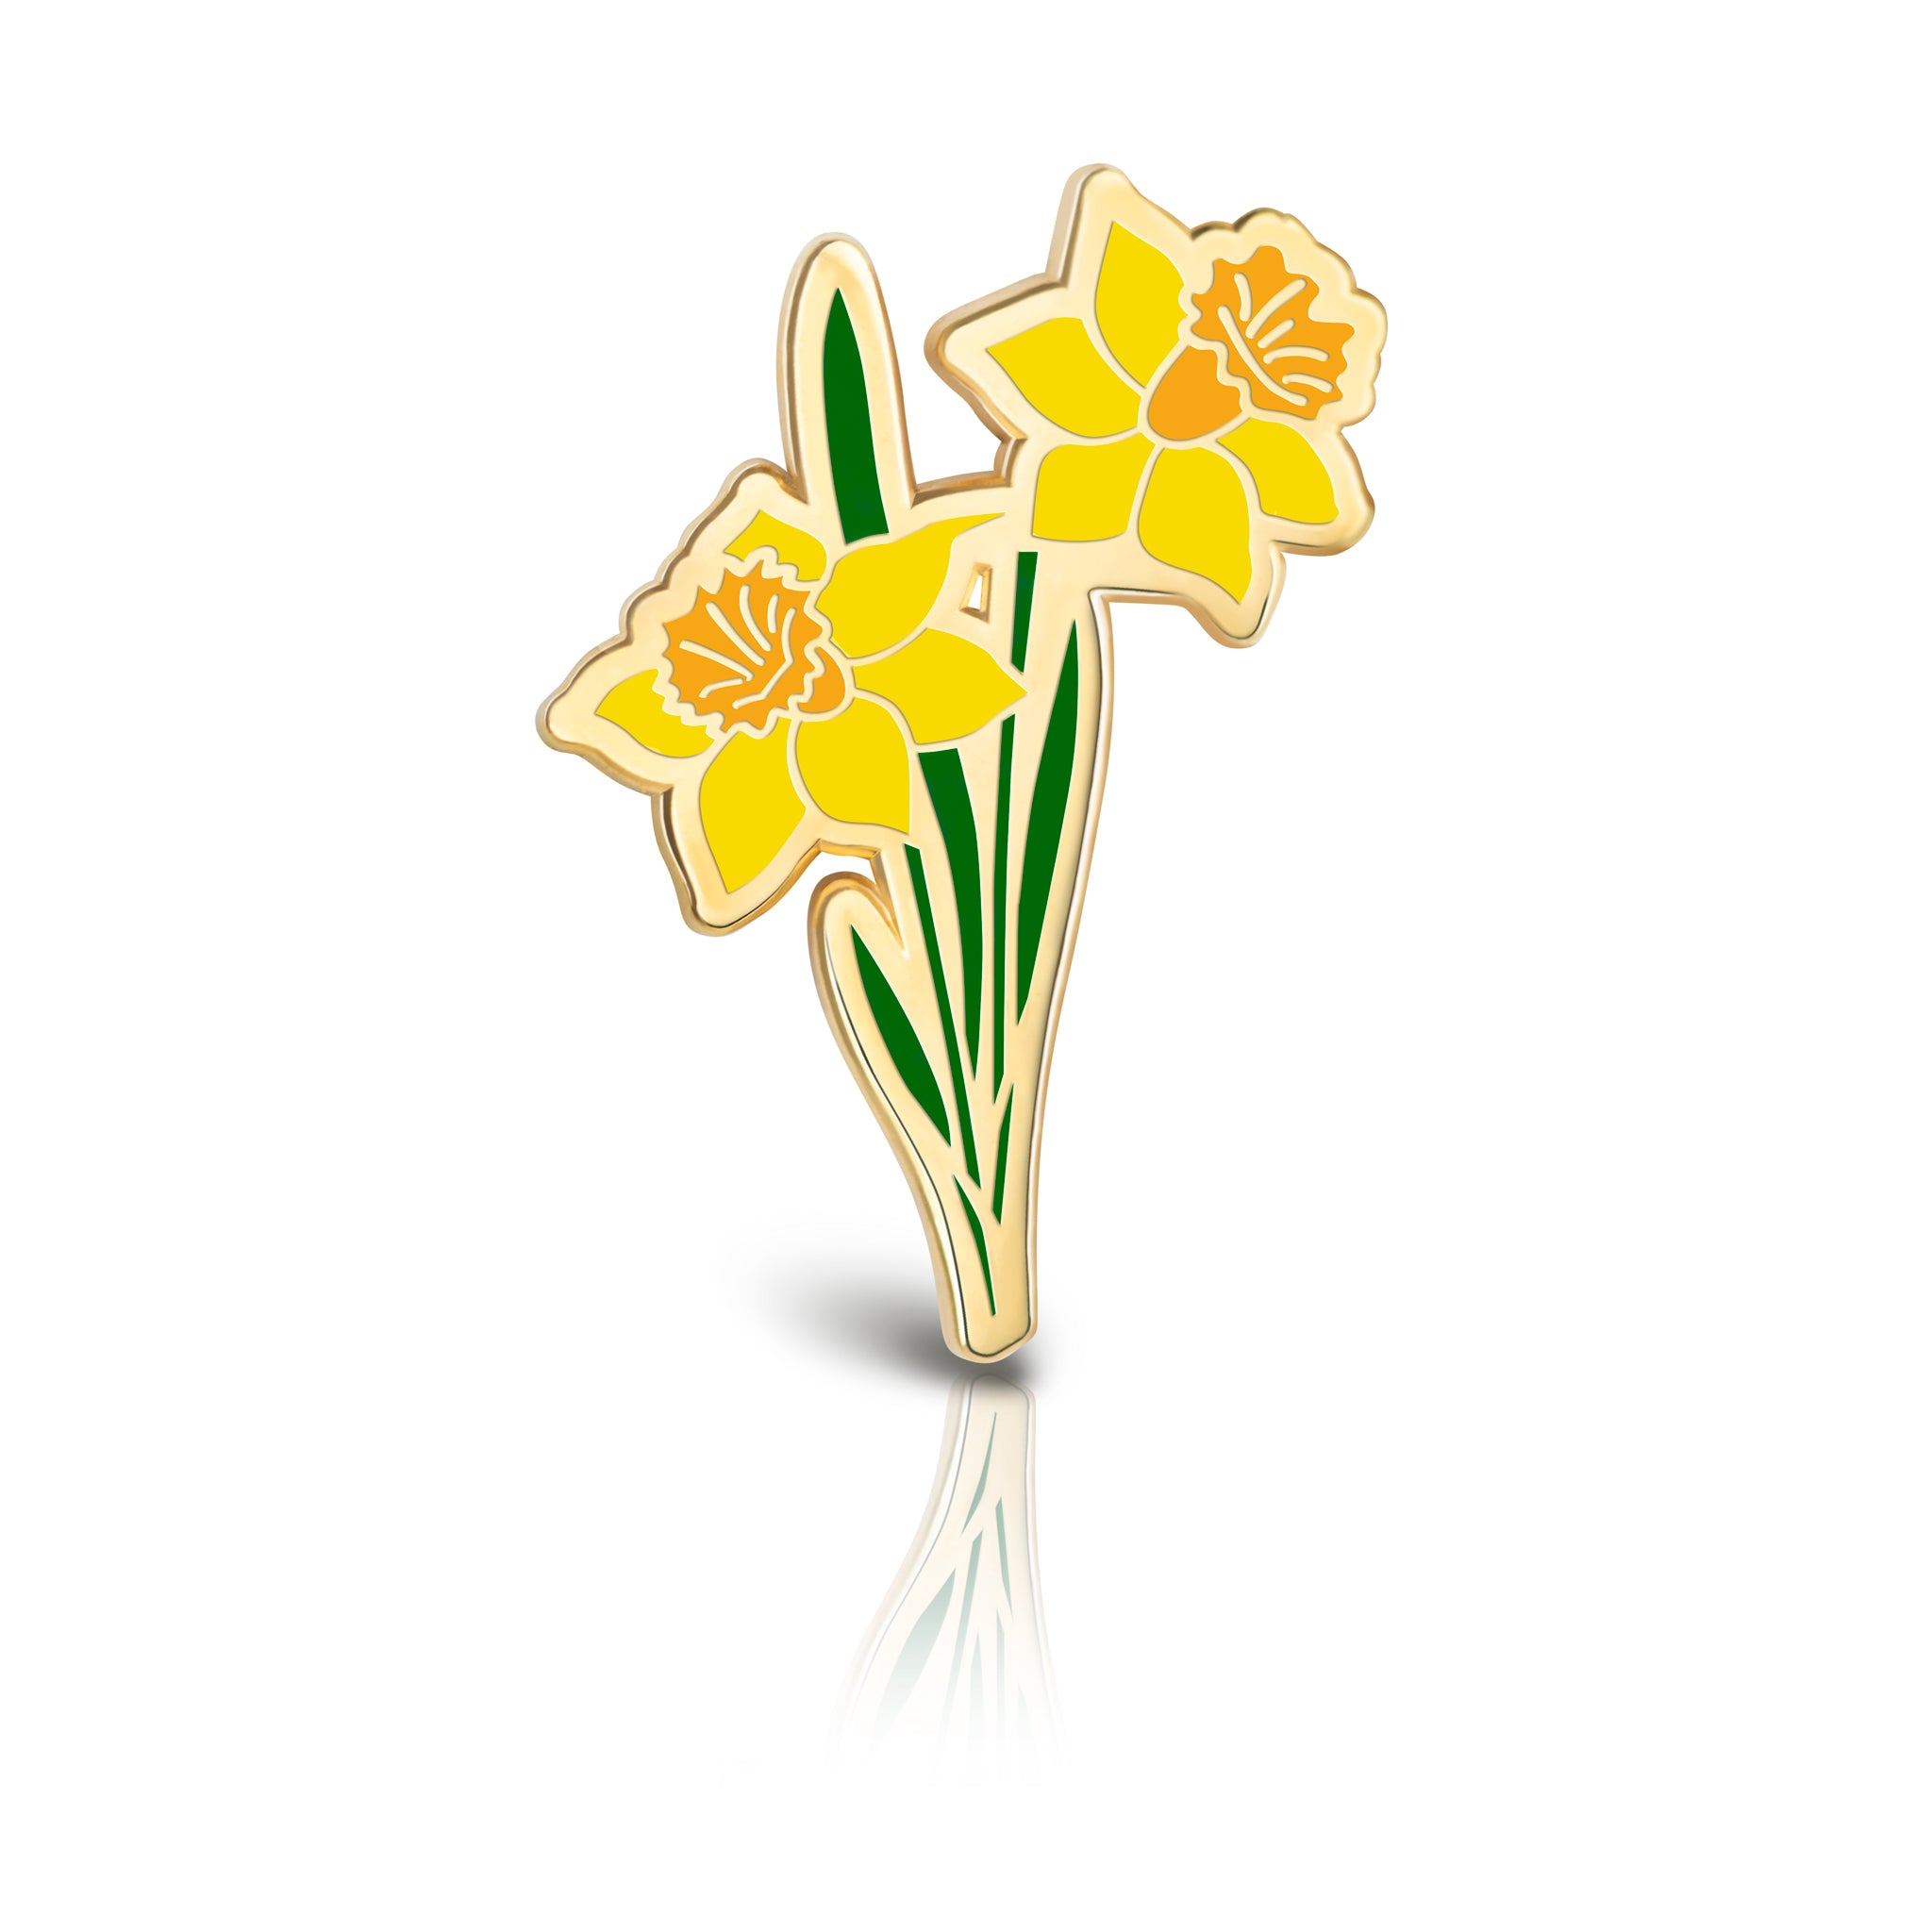 Pin on Birth flowers